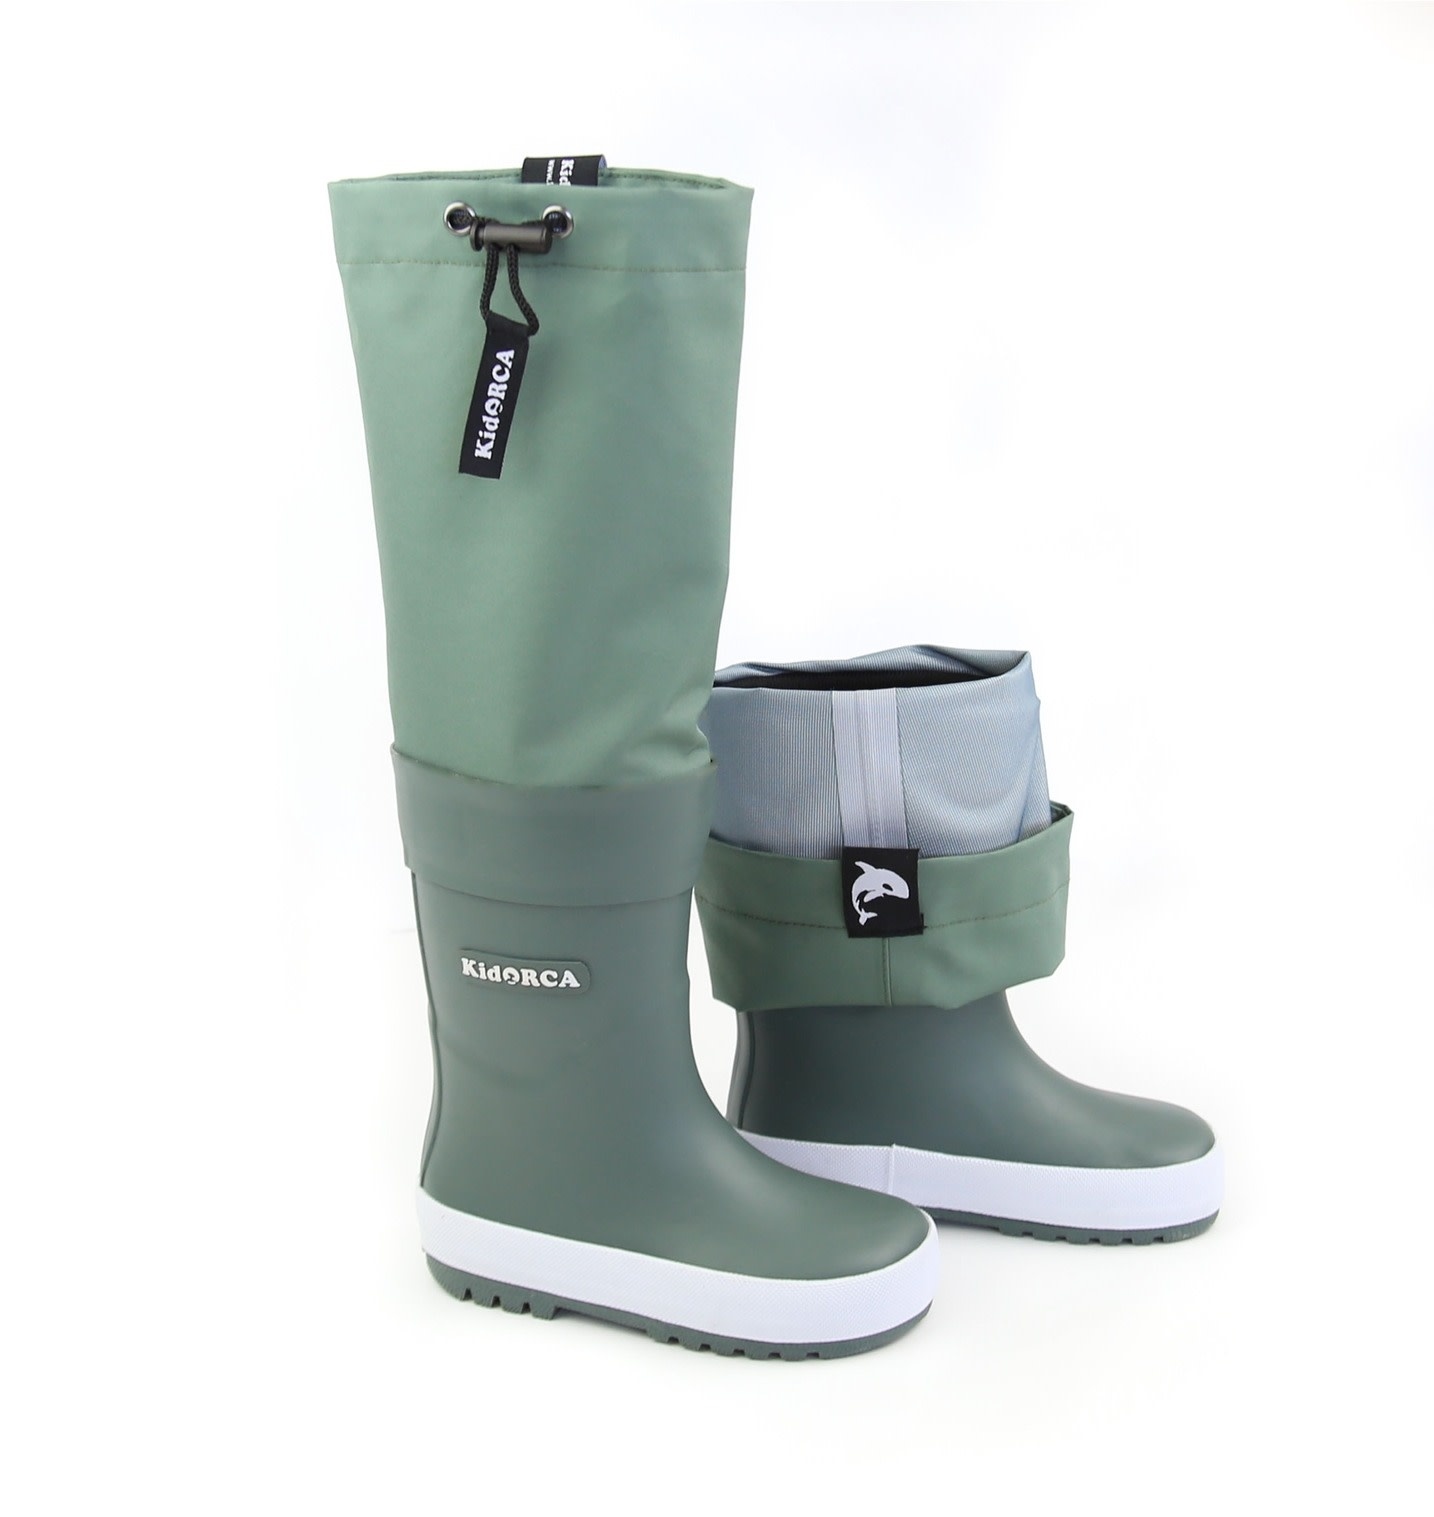 Trace rain boots